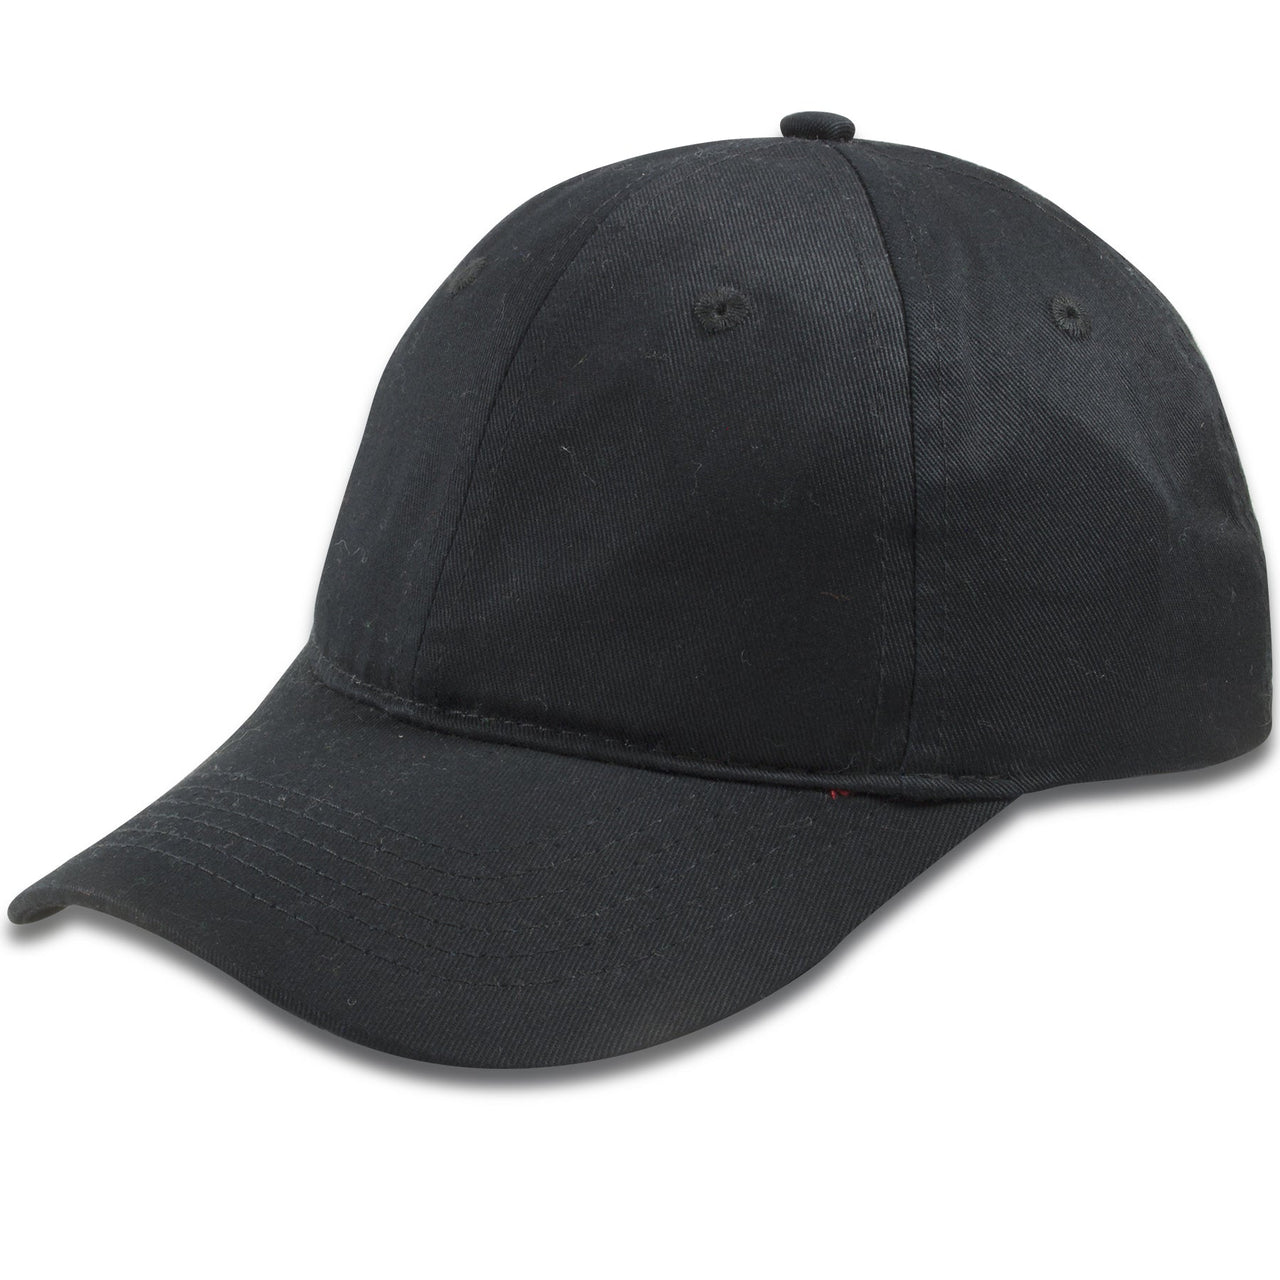 Blank Black Youth Sized Adjustable Baseball Cap